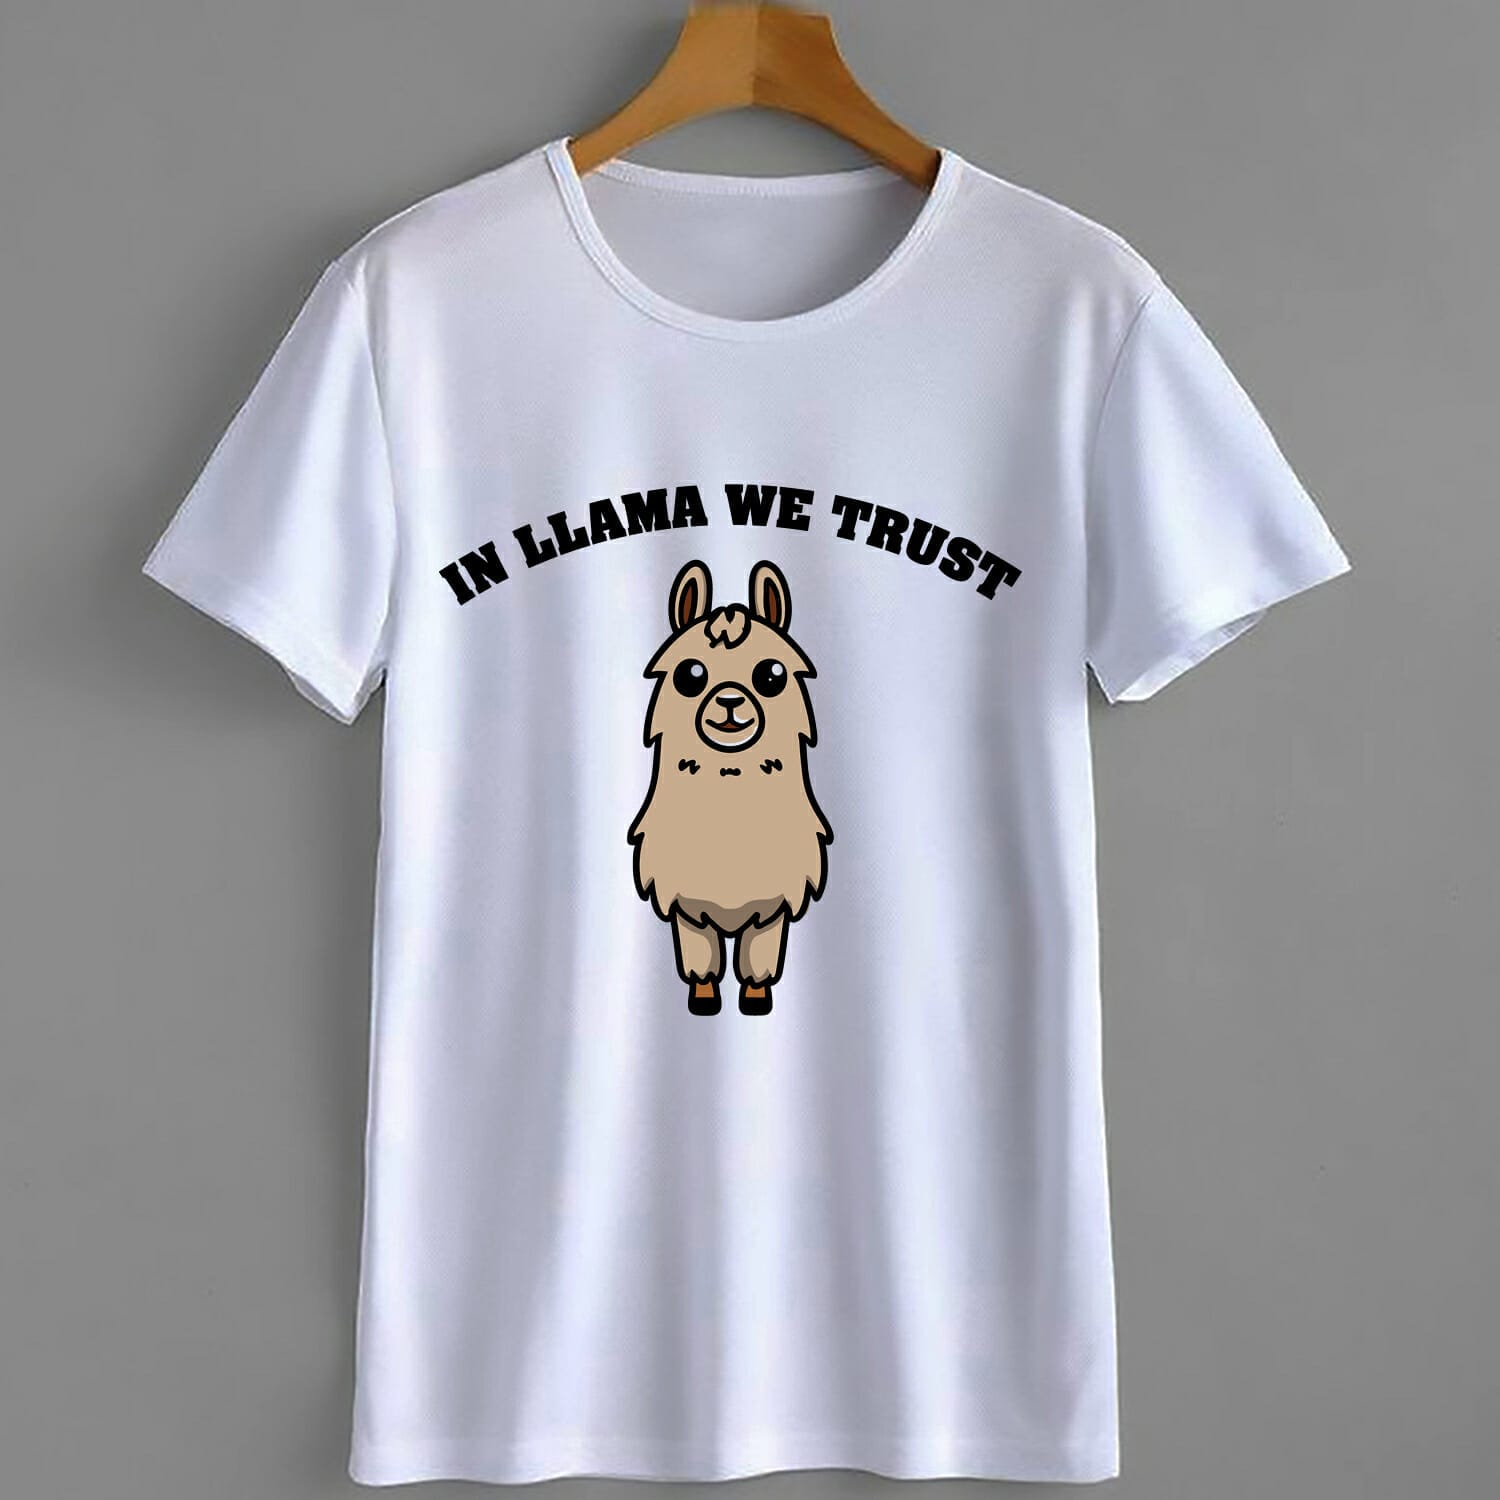 In Llama We Trust - Funny T-Shirt Design